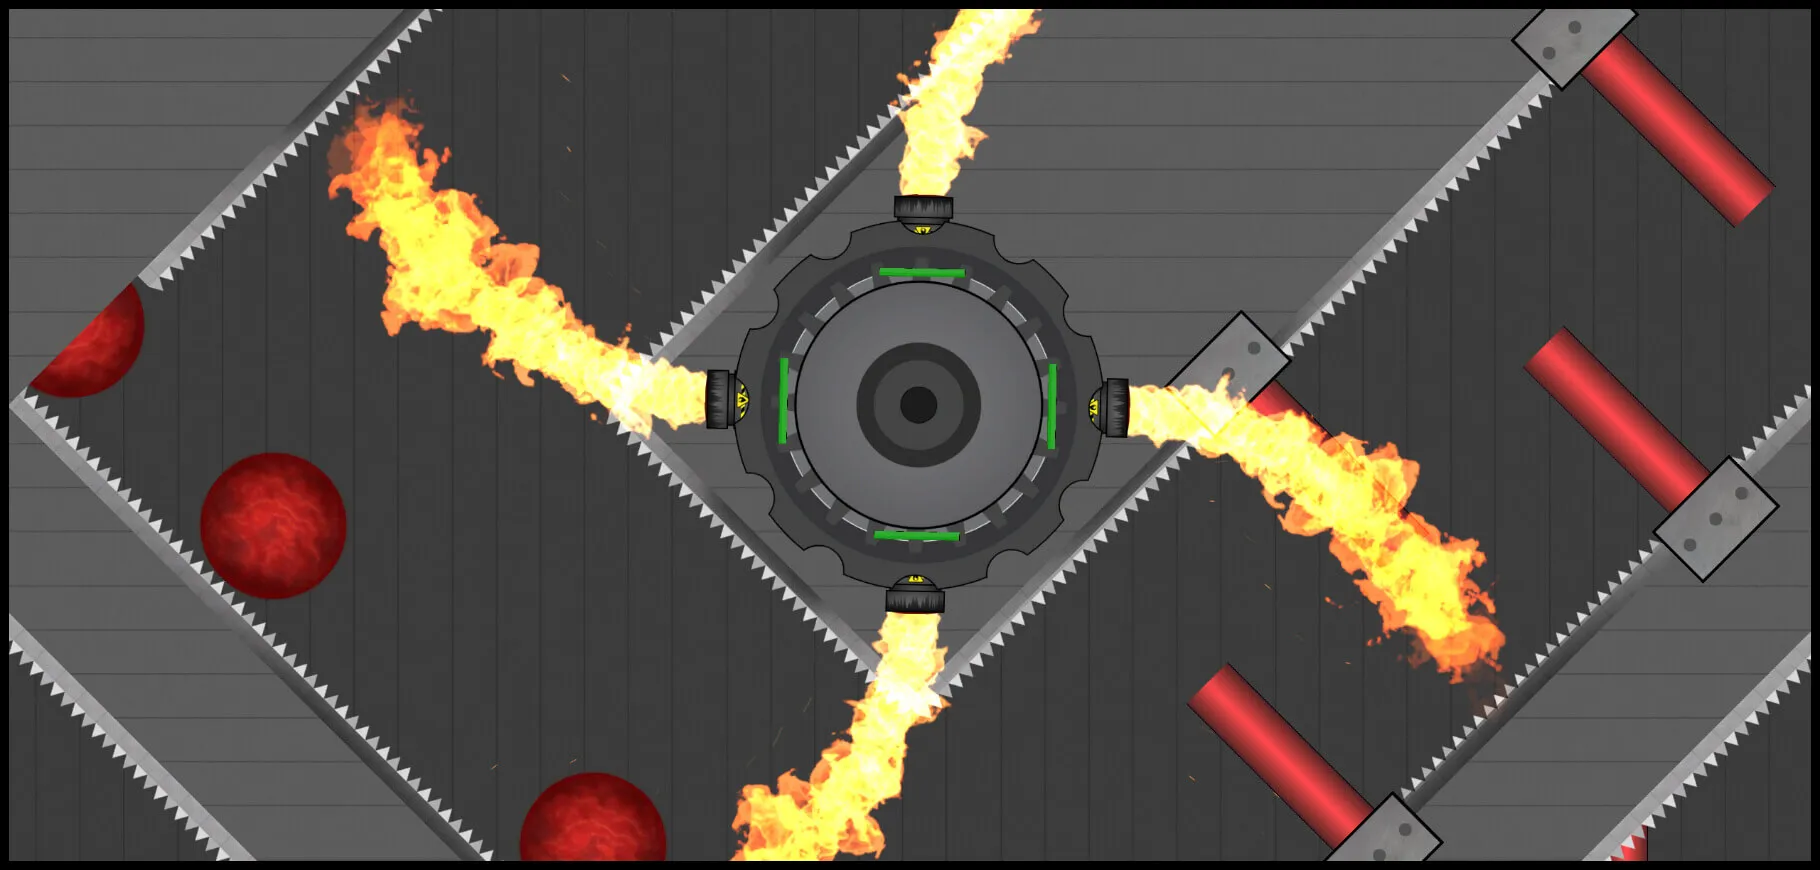 danger zone level screenshot from the steam game reflex runner.